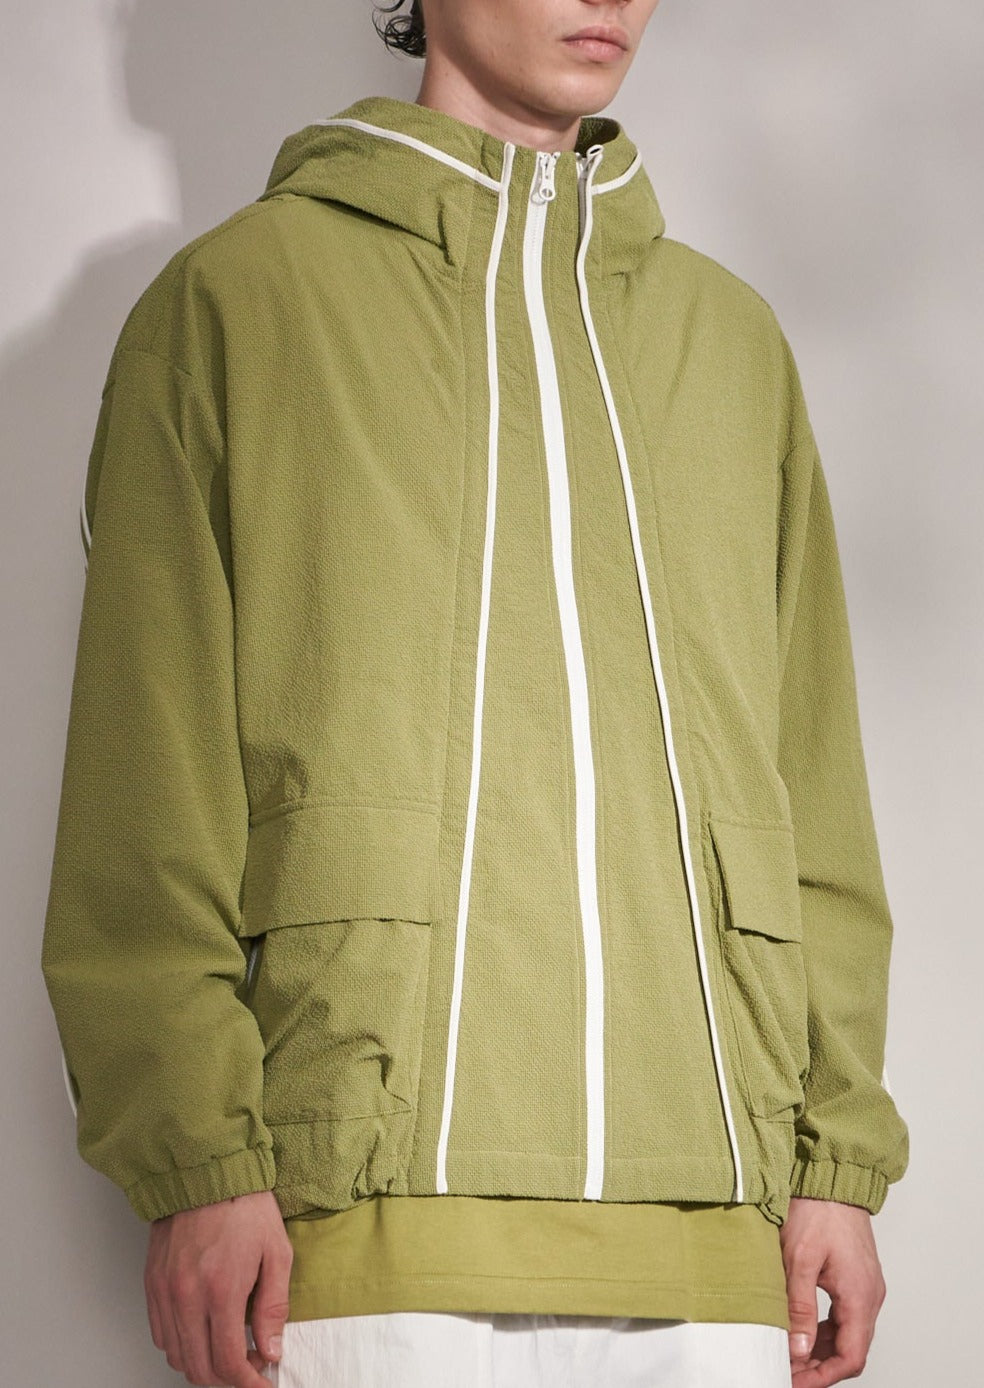 3 Zippers Jacket With Hood - Harrison Wong